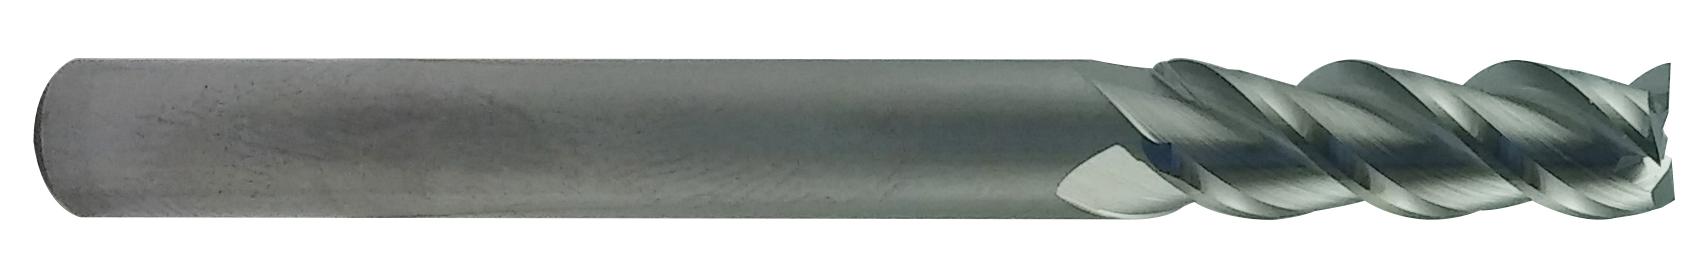 7/8 Flute Length F&D Tool Company 17804 High Helix 3 Flute Center Cutting Carbide Endmill 3/8 Shank Diameter 45 Degrees 3/8 Flute Diameter 2 1/2 Overall Length 